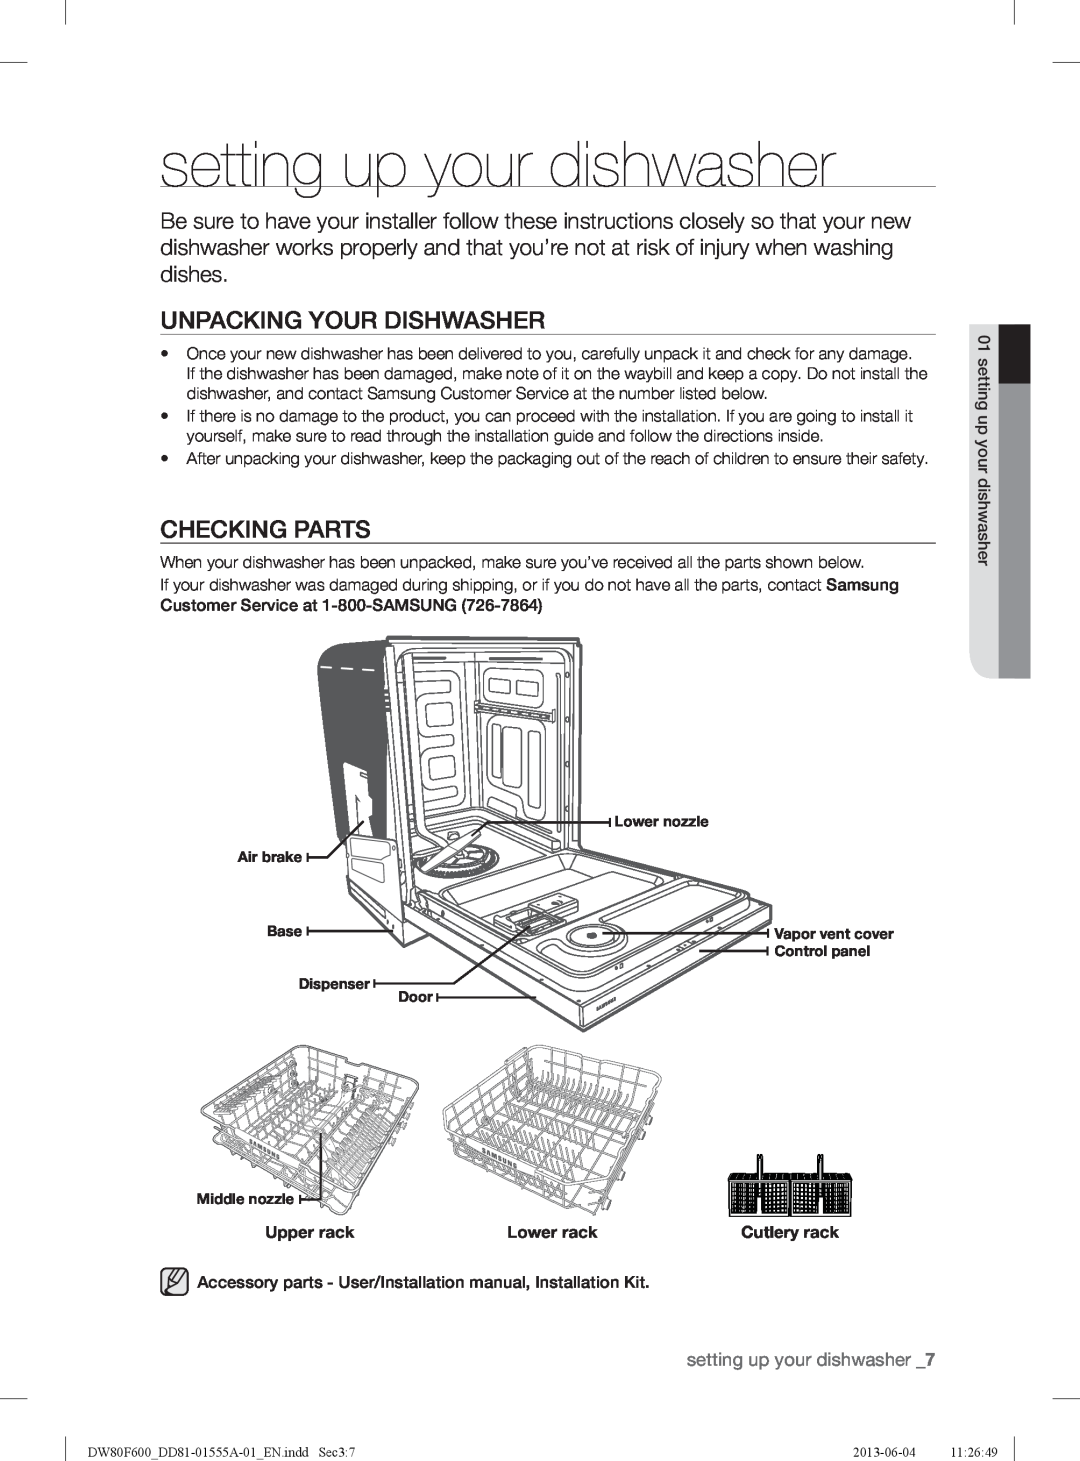 Samsung DW80F600UTW setting up your dishwasher, Unpacking Your Dishwasher, Checking Parts, Upper rack, Lower rack, Base 